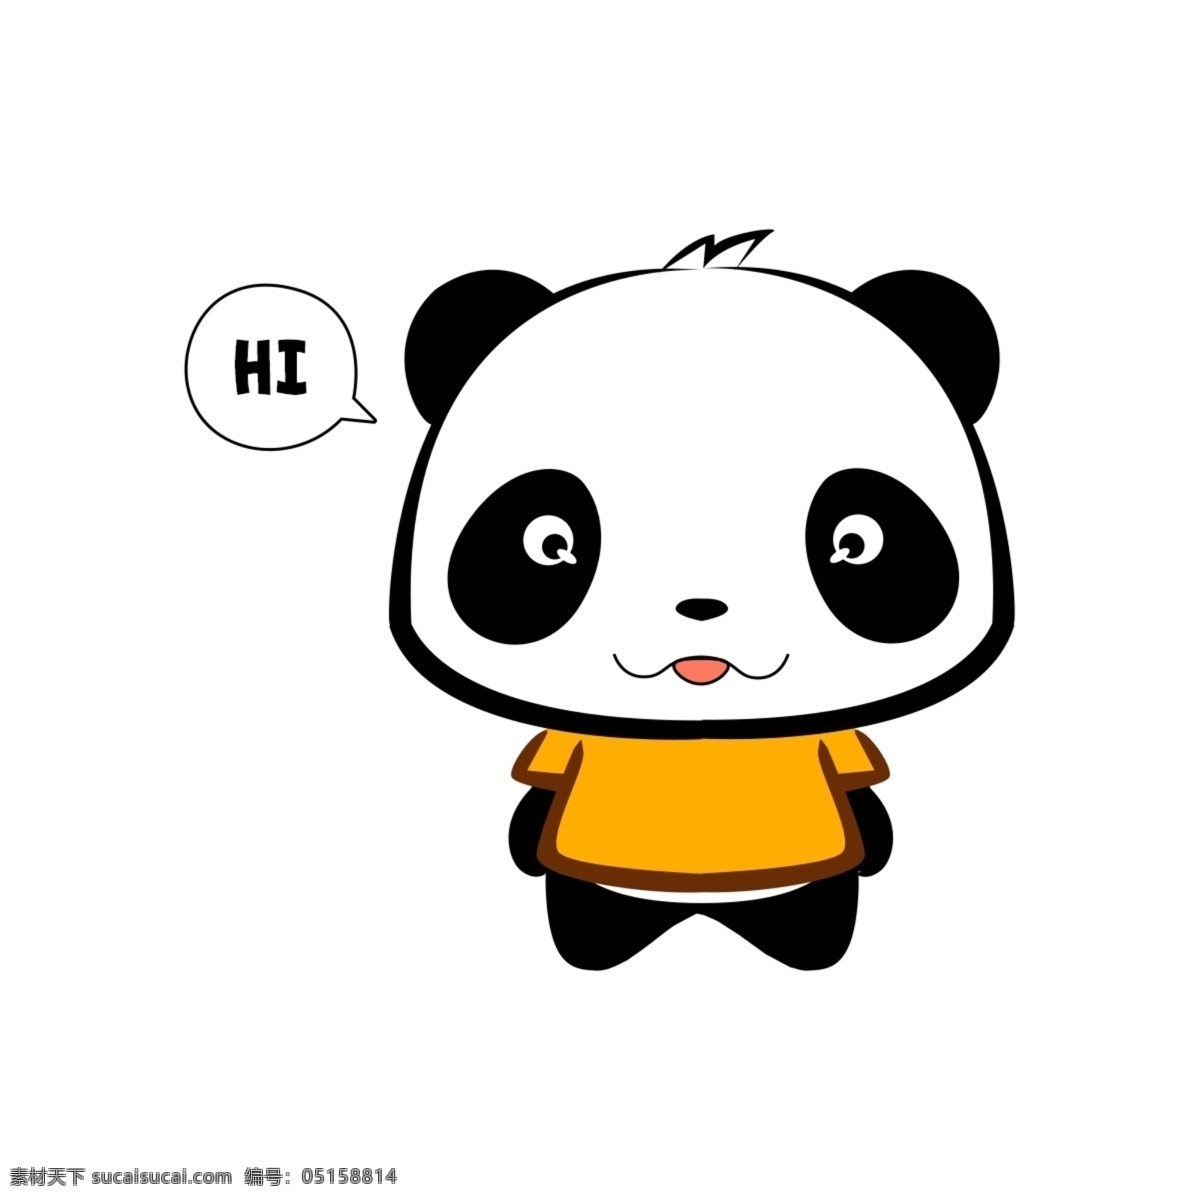 熊猫 打招呼 表情 包 可爱 卖萌 hi 表情包 表情设计